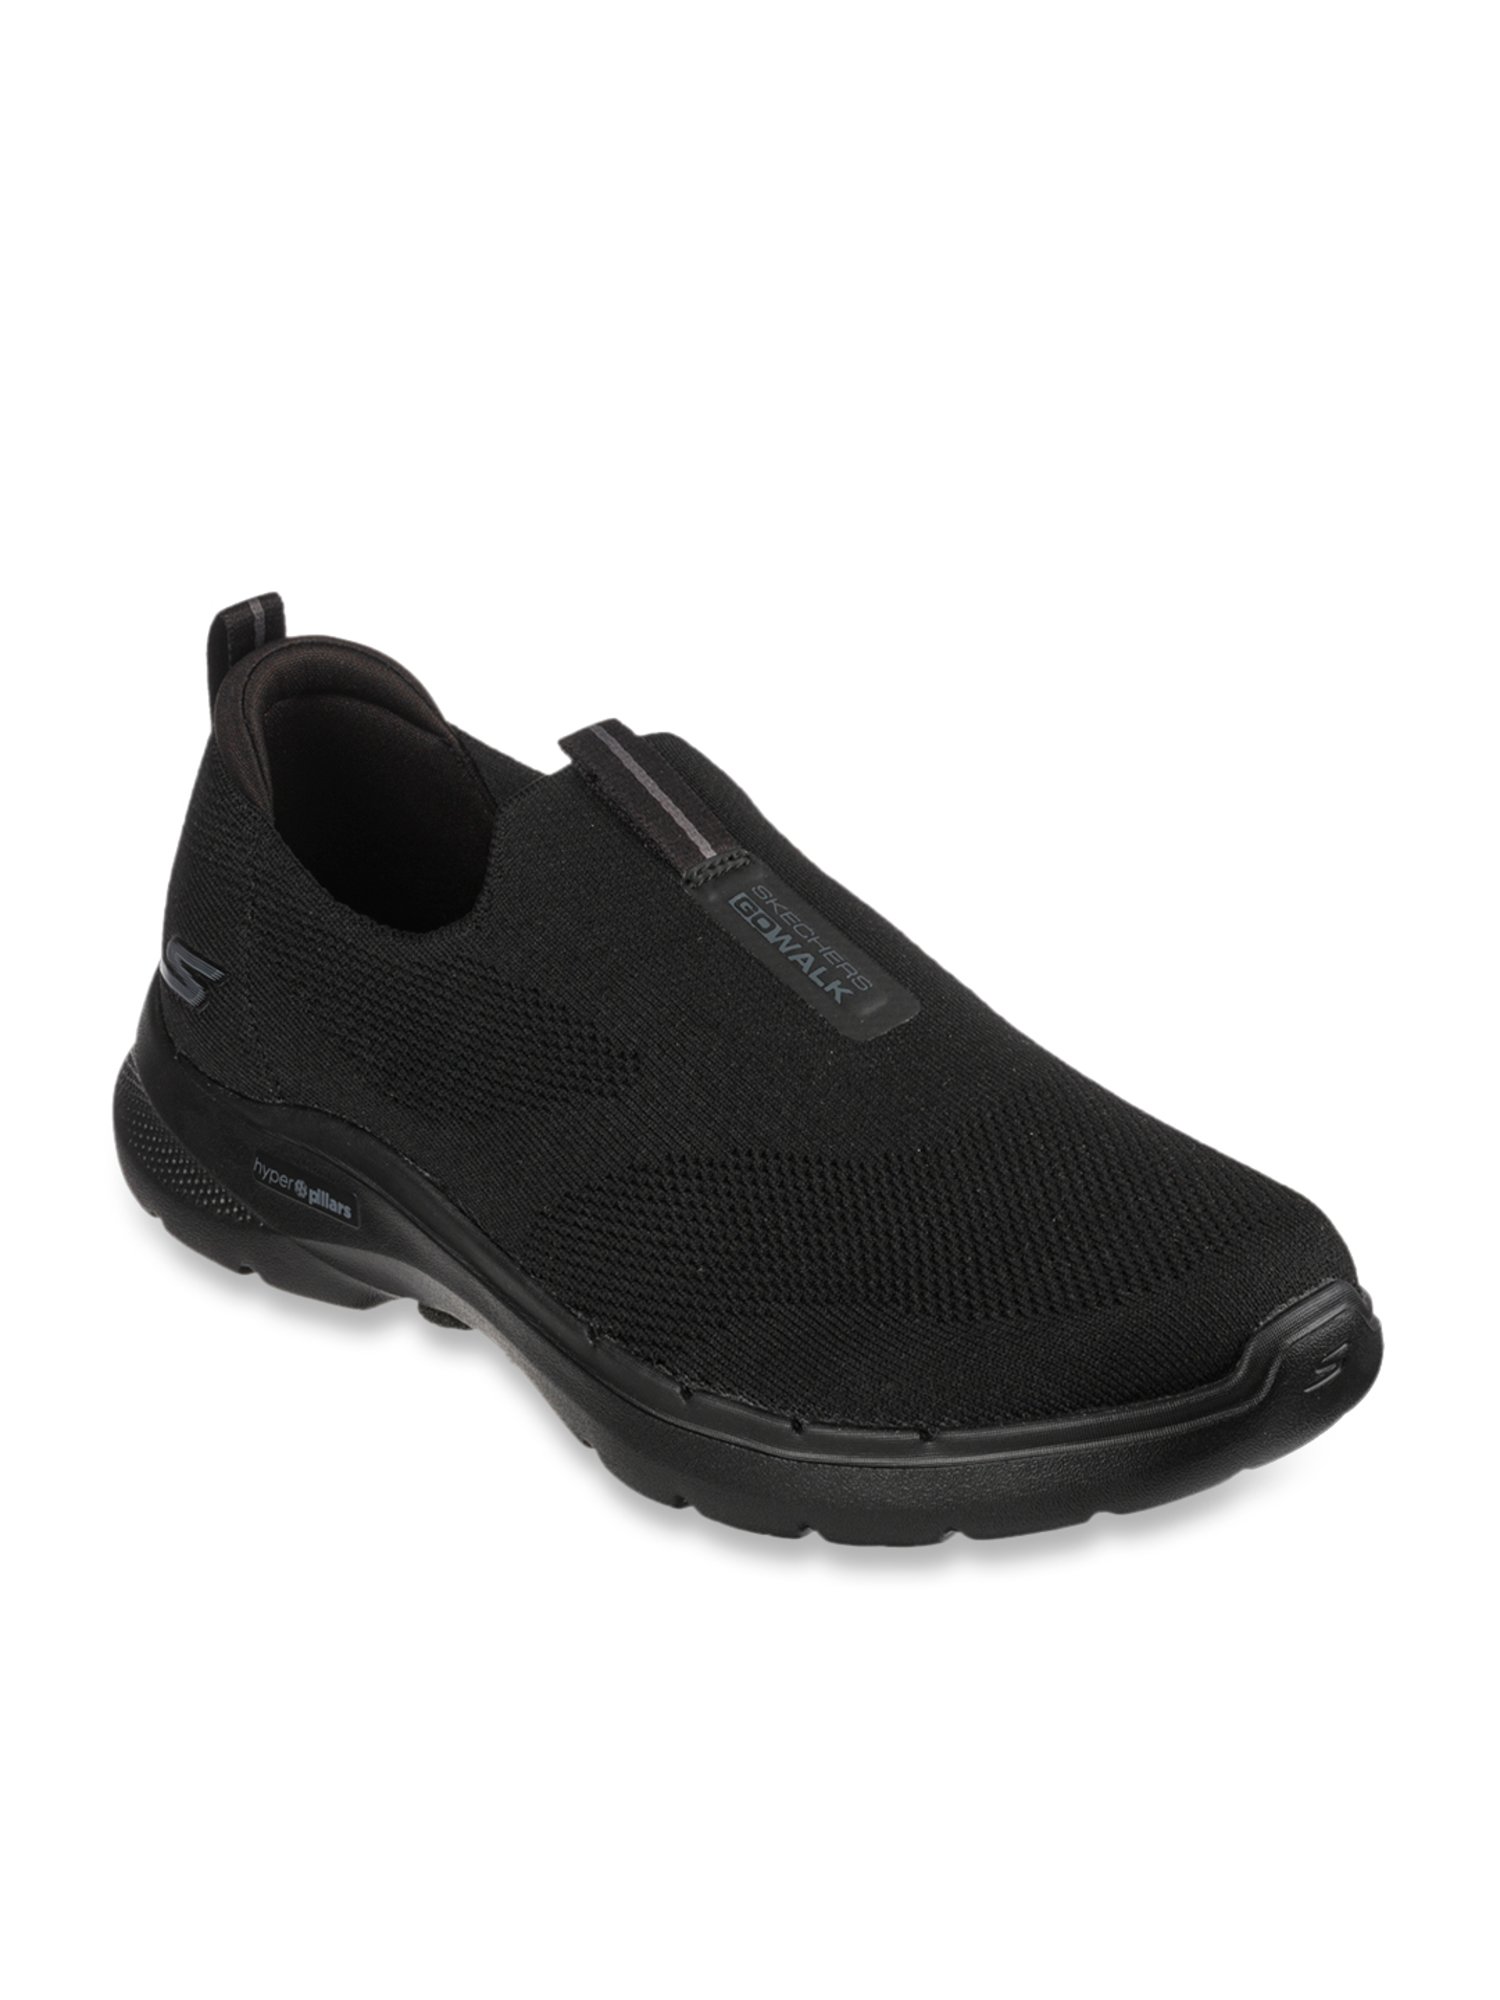 Buy Skechers Men's GO WALK 6 Black Walking Shoes for Men at Best